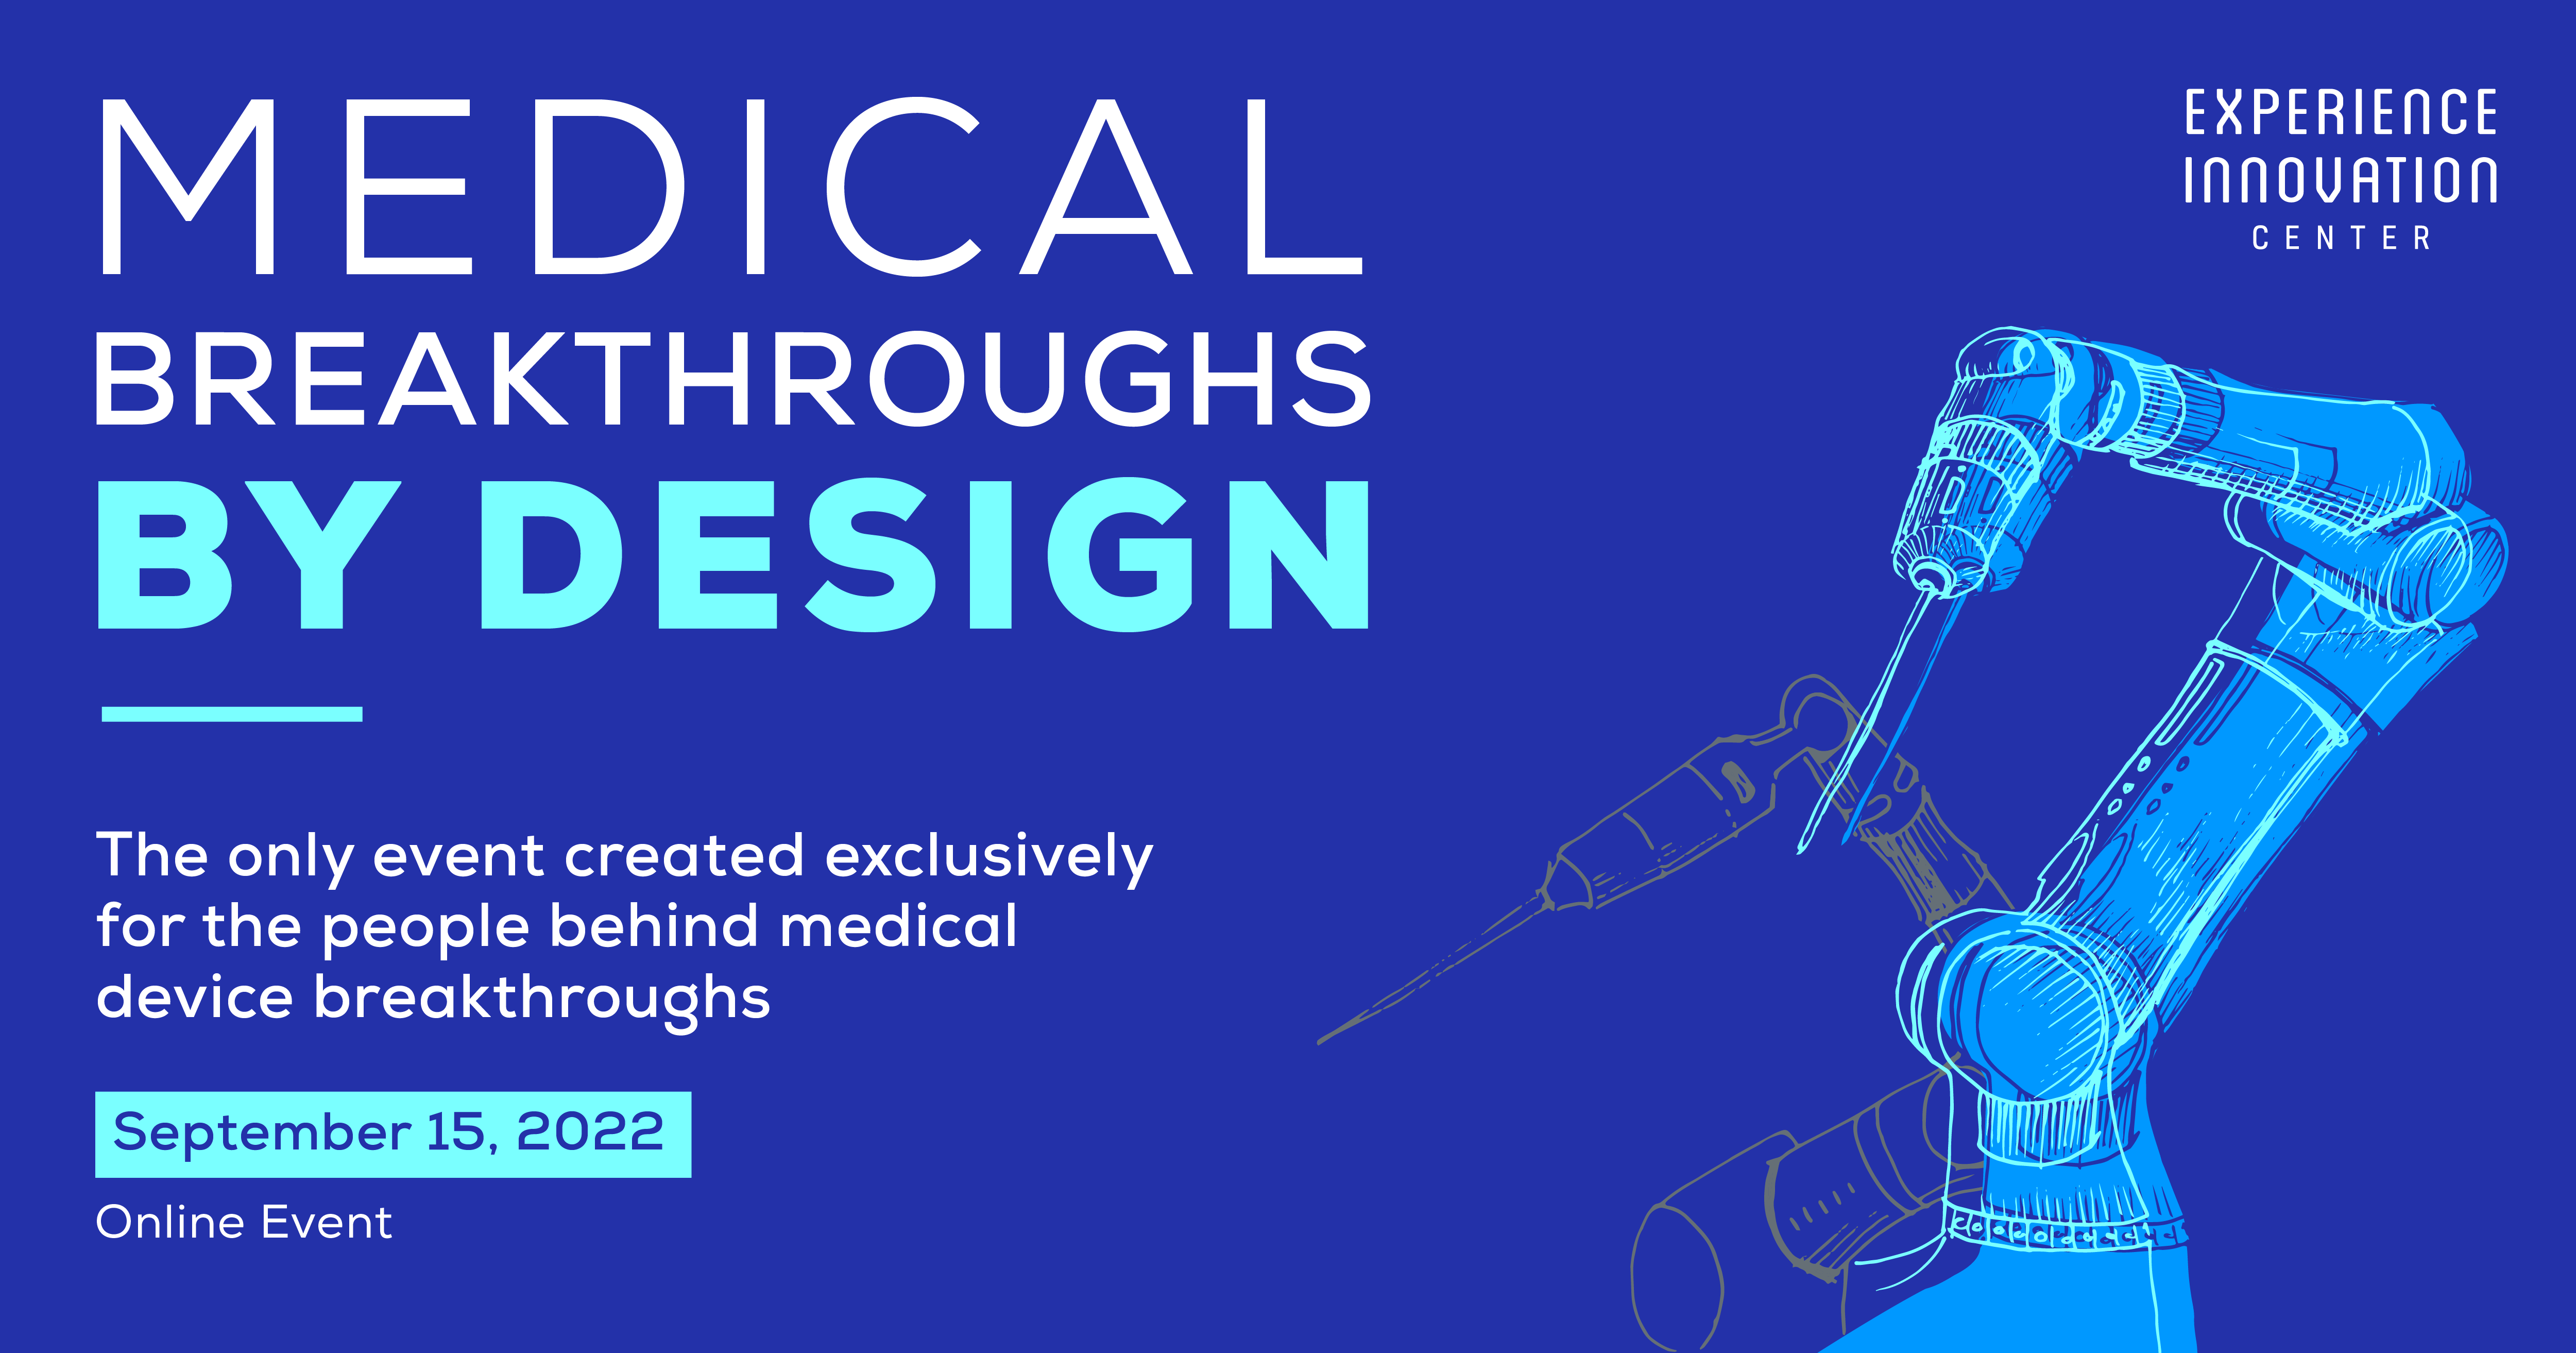 Upcoming Online Event: Medical Breakthroughs By Design